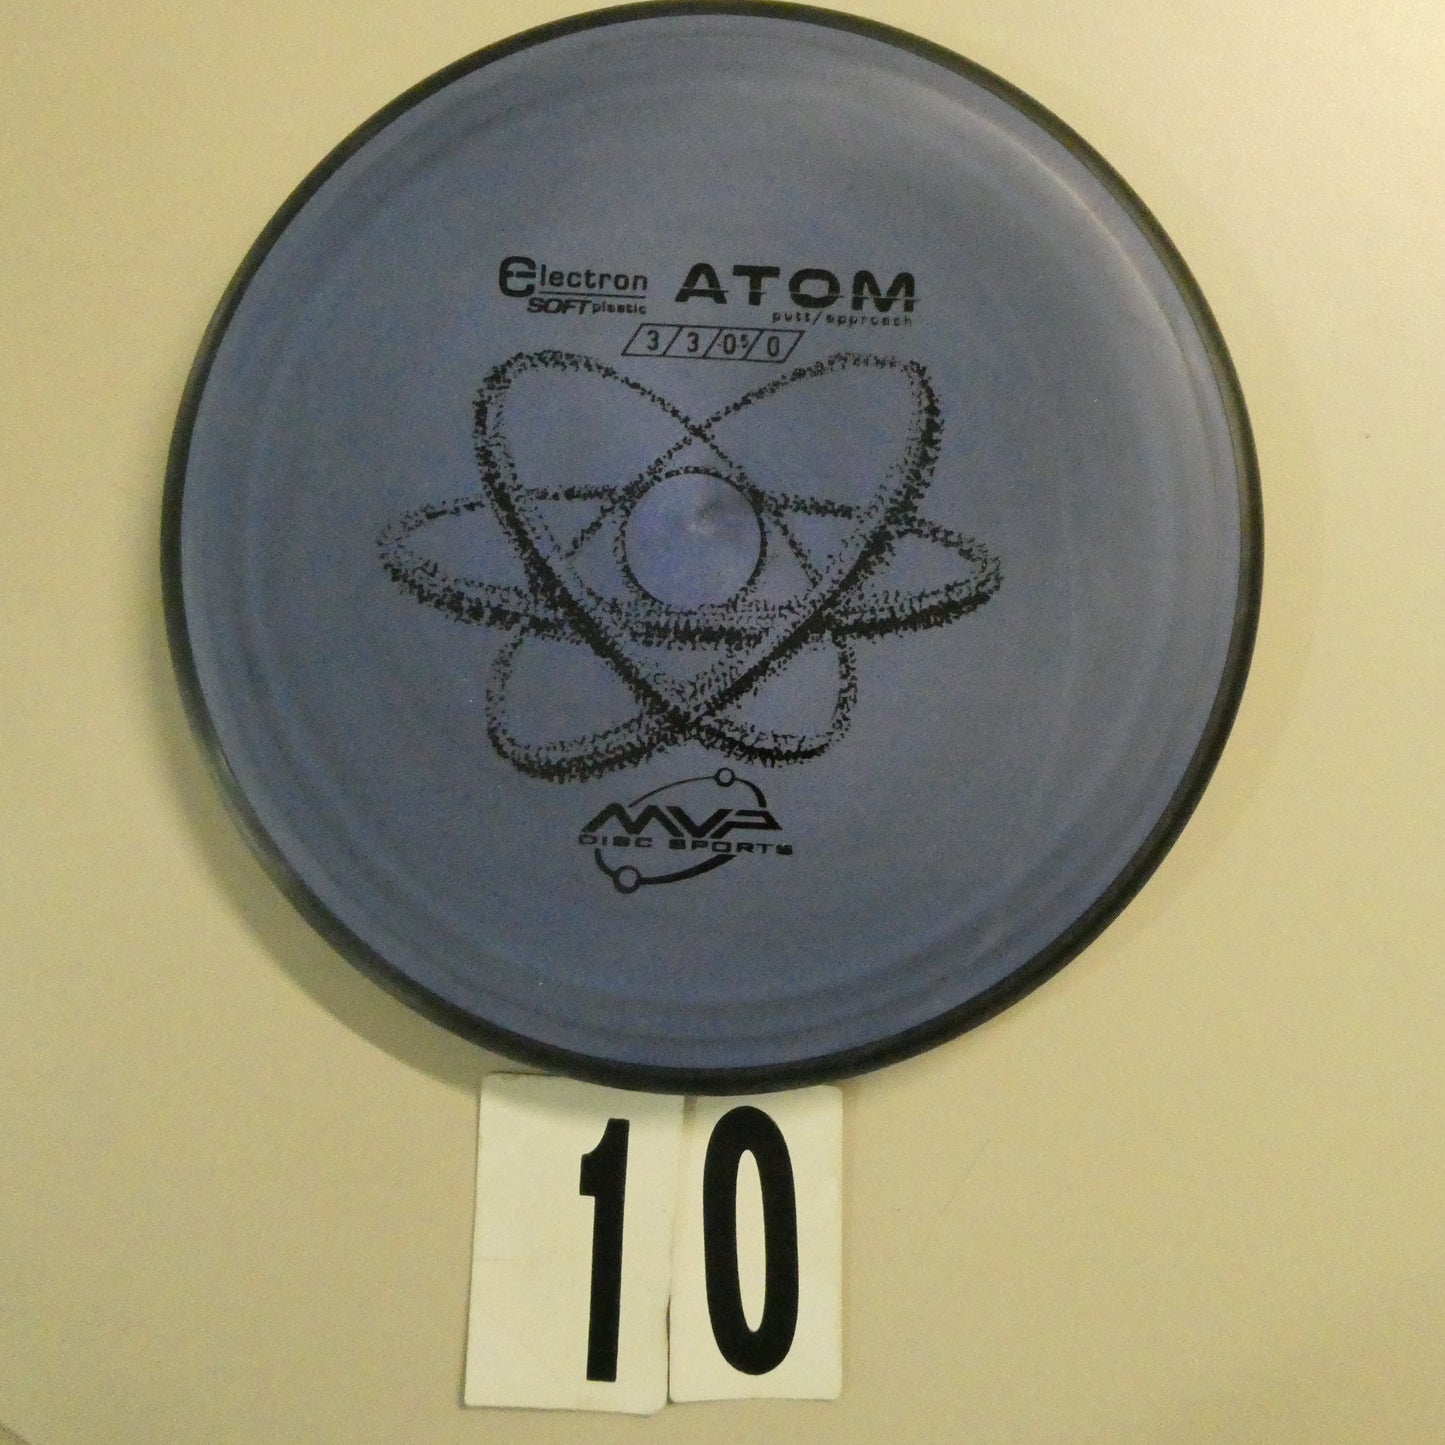 Soft Electron Atom